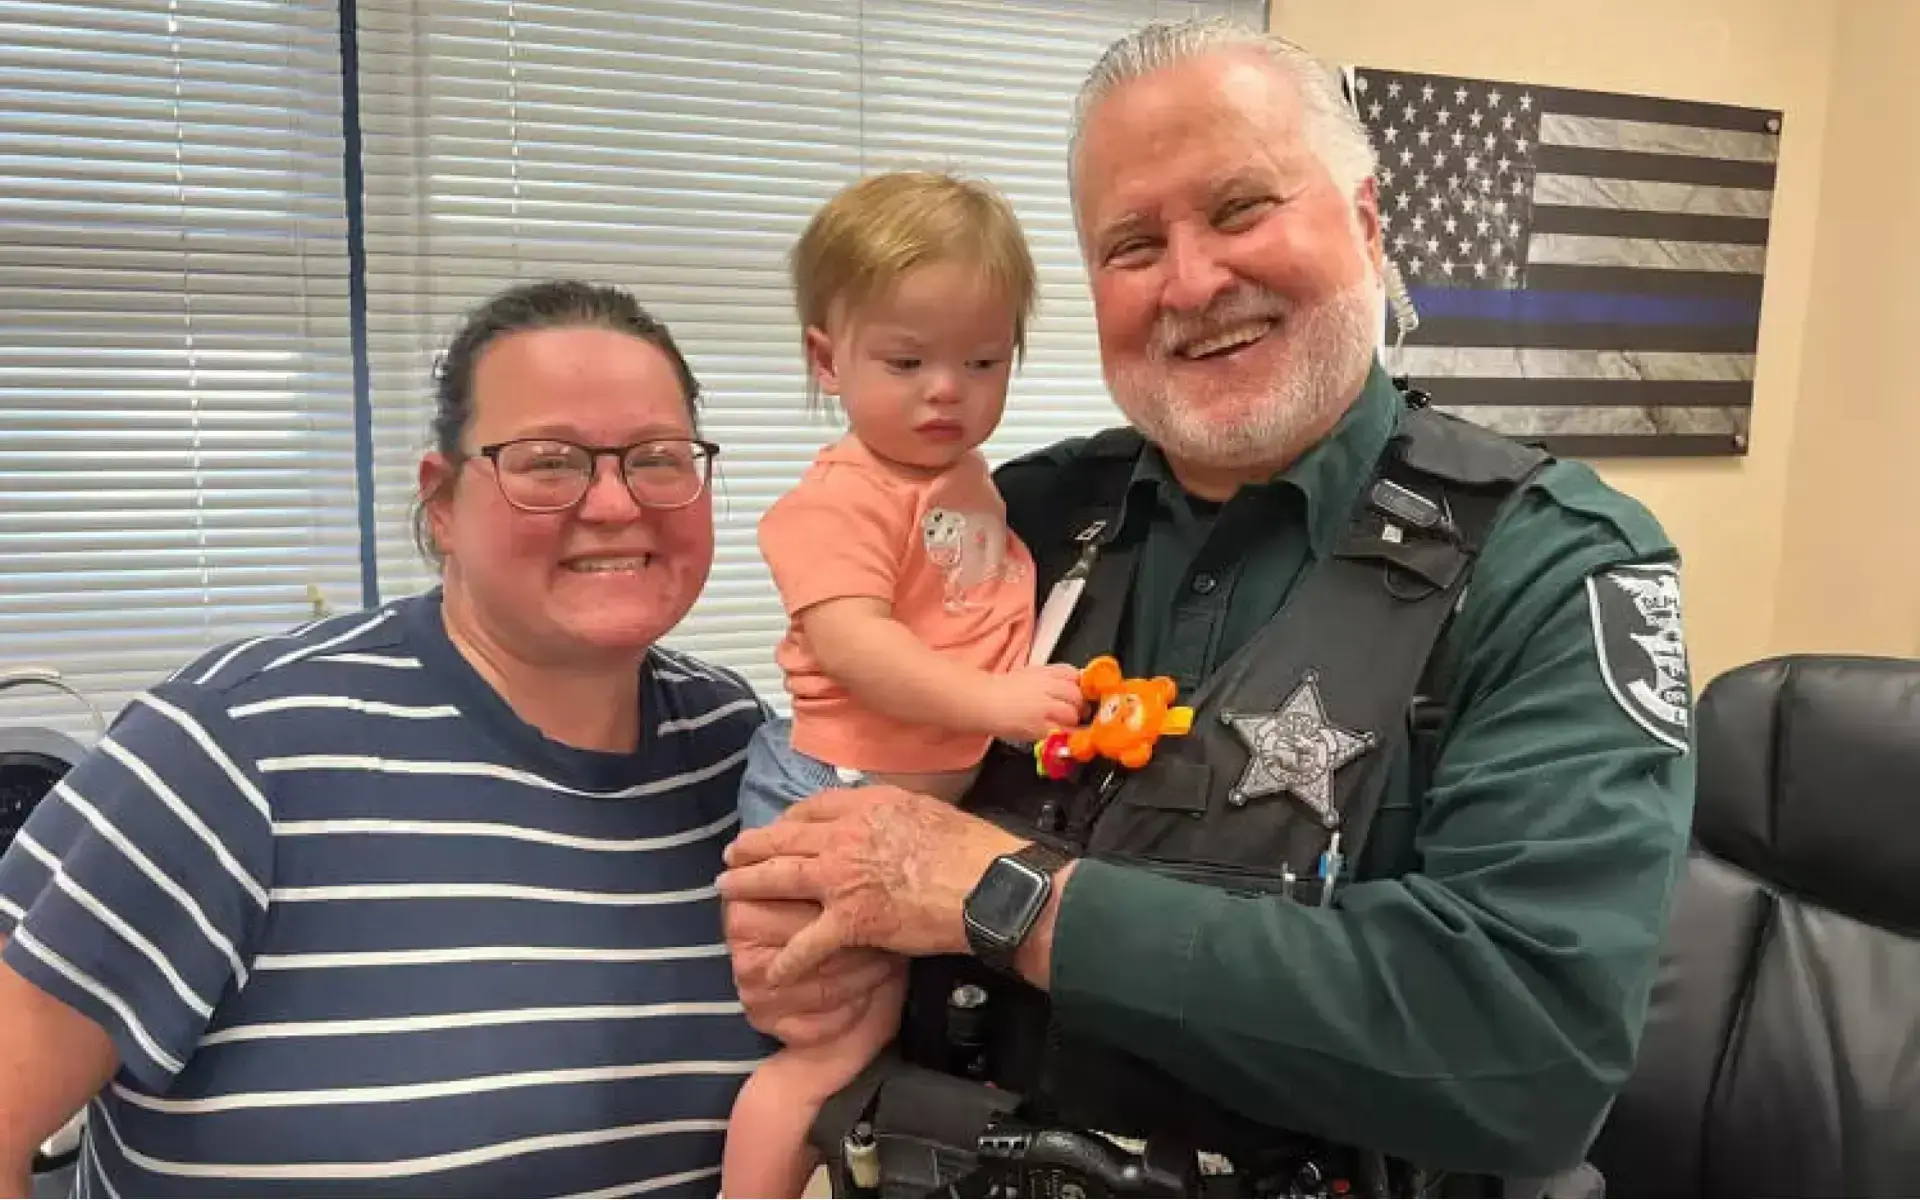 Deputy William Weaver With Baby Cheyanne